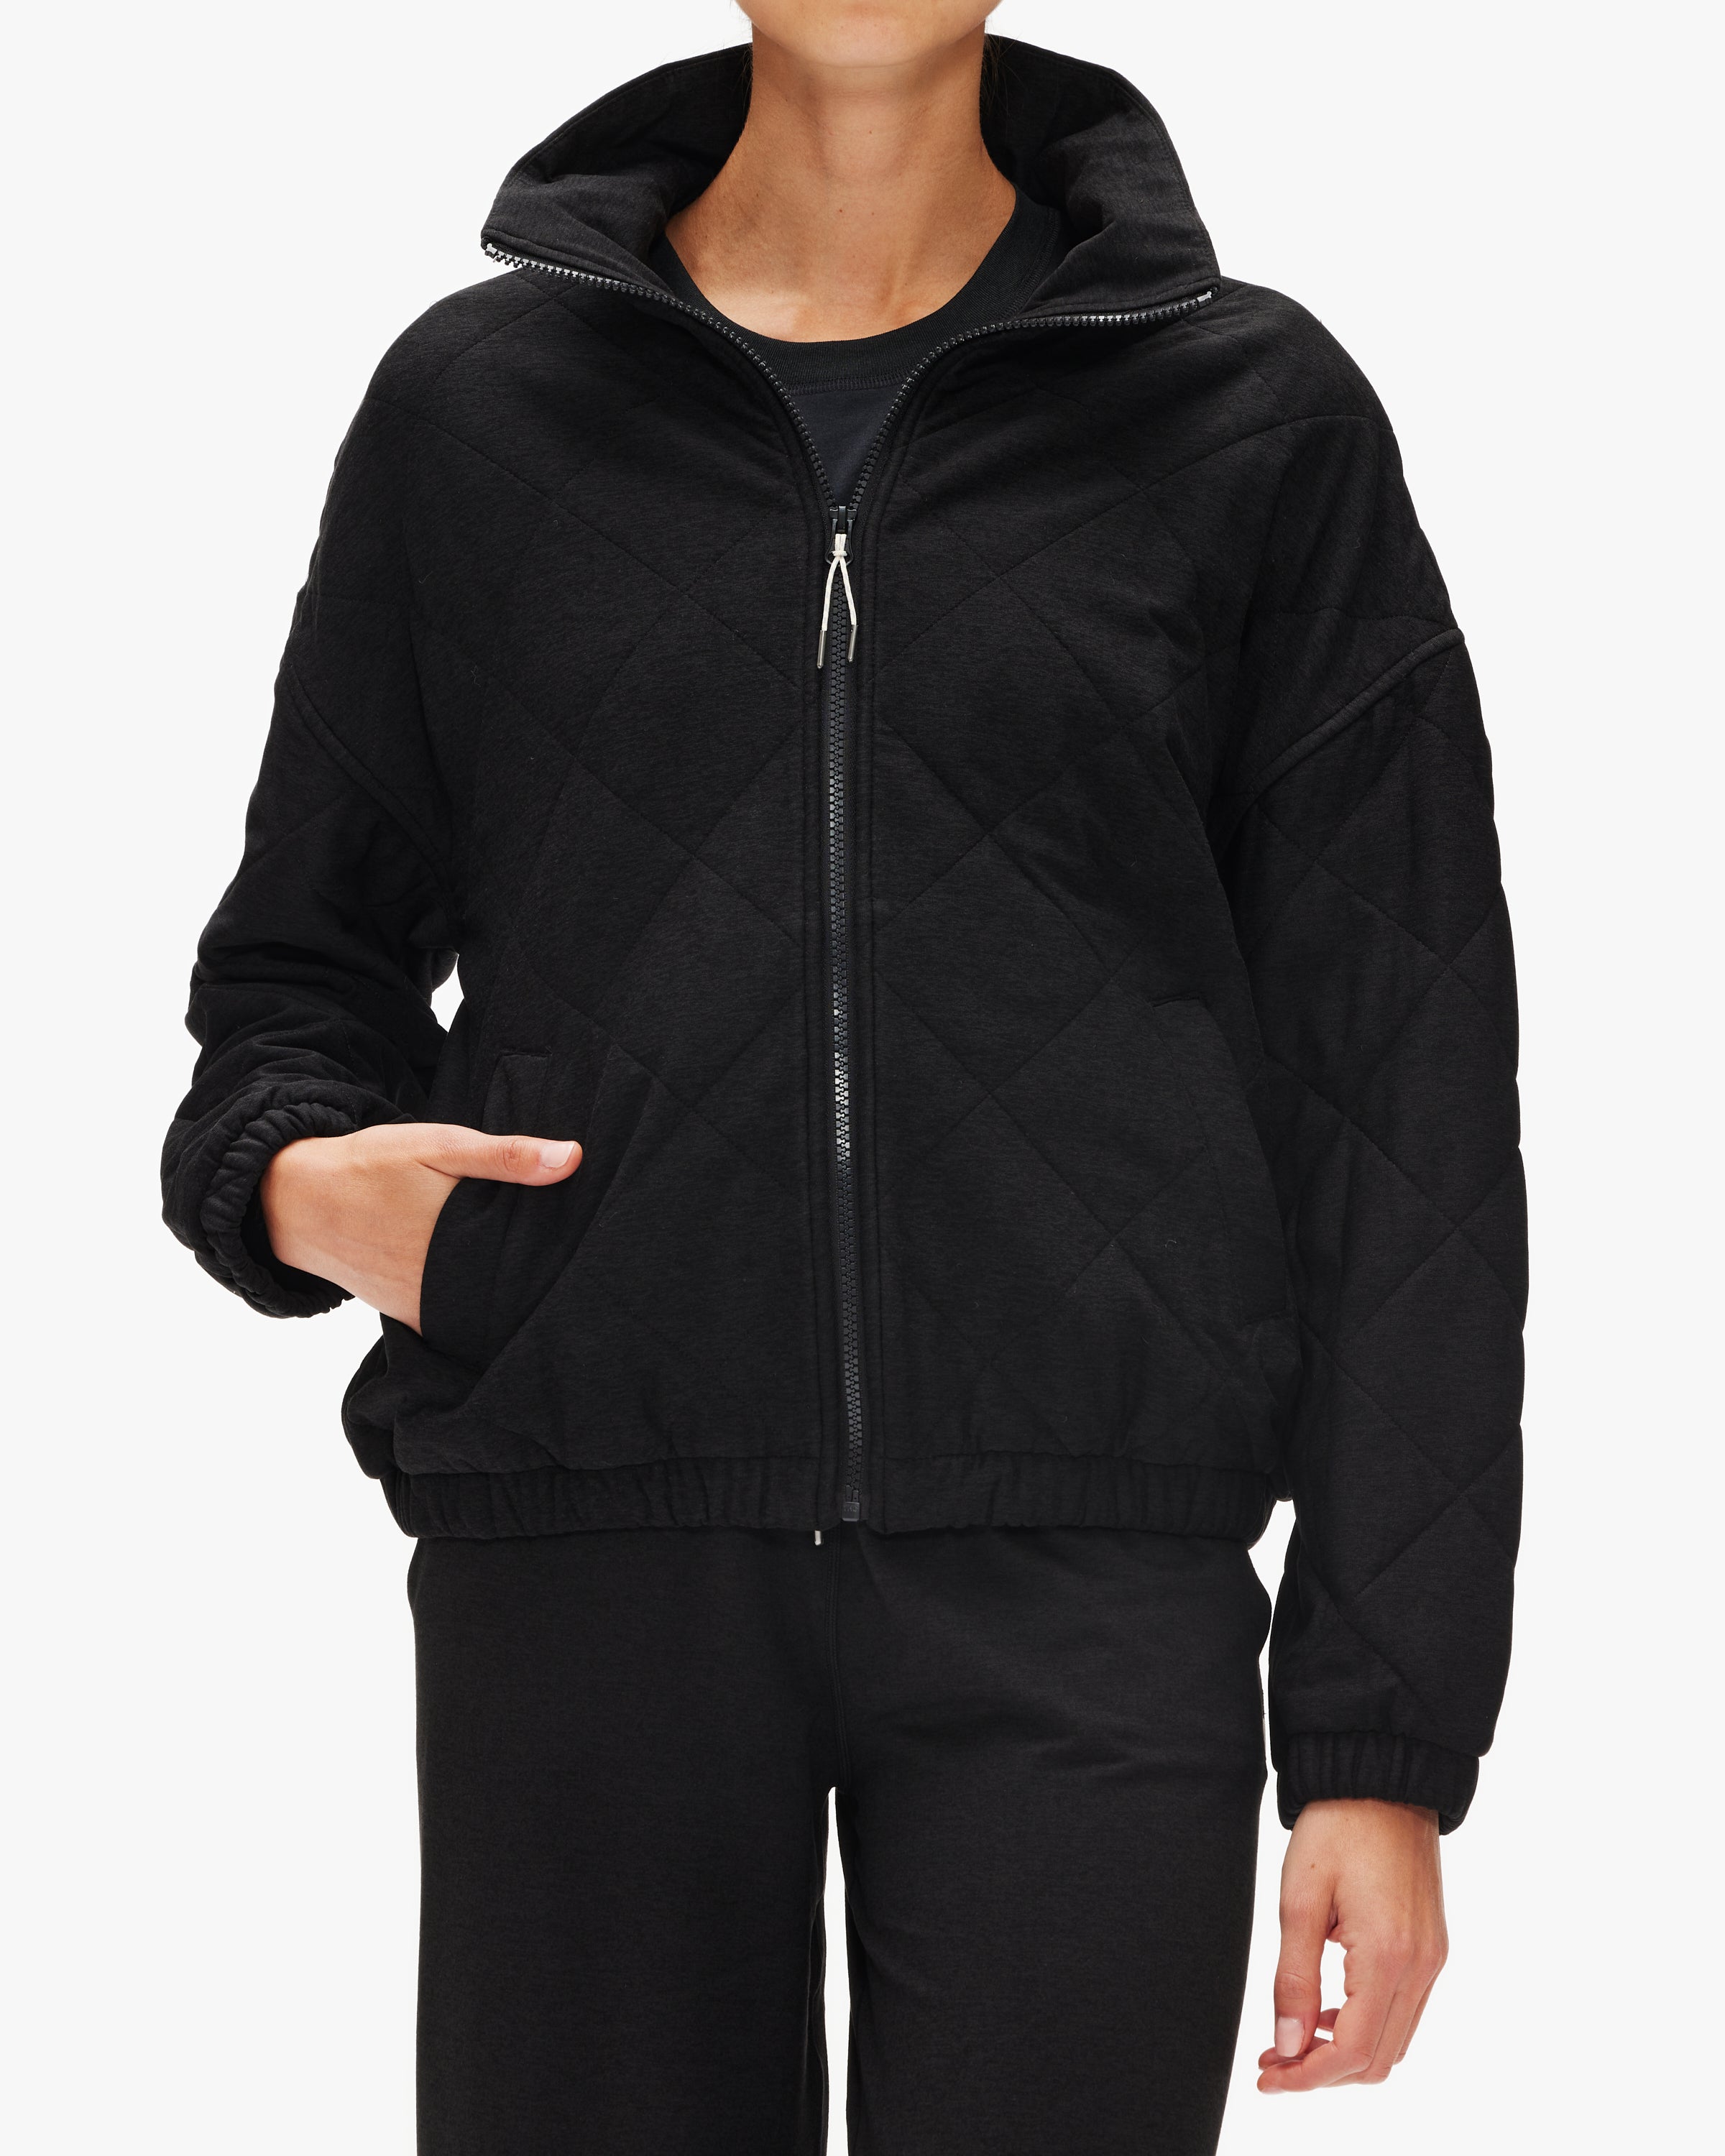 NWT Vuori Women's DreamKnit Halo Insulated Jacket XL